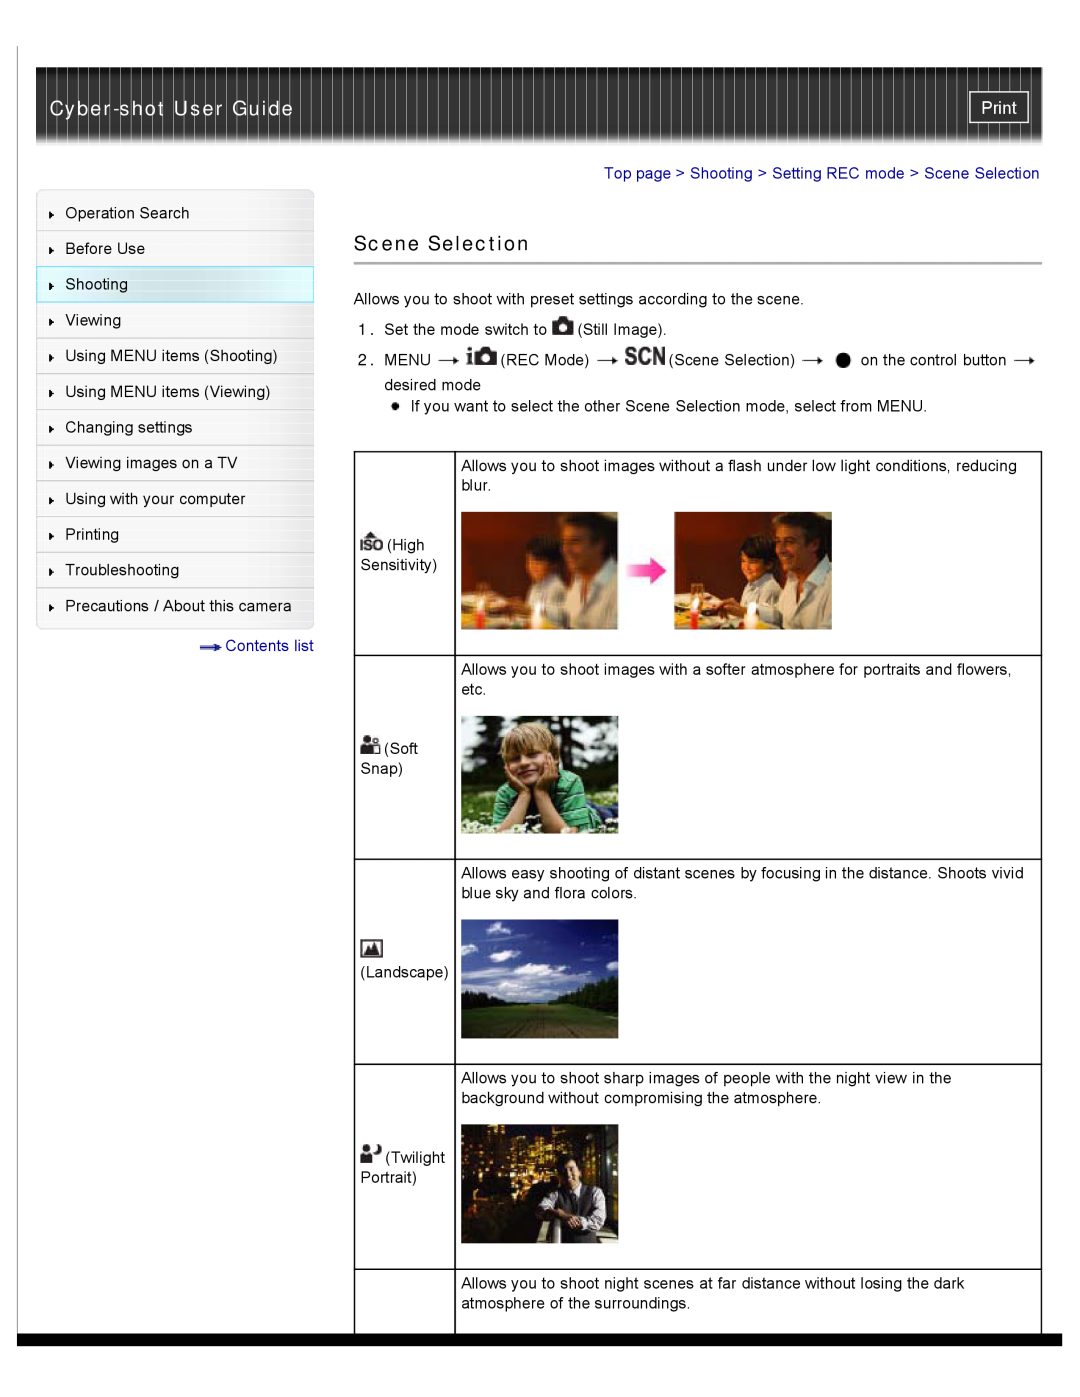 Sony DSC-W510 manual Scene Selection, Cyber-shot User Guide, Print, Contents list 